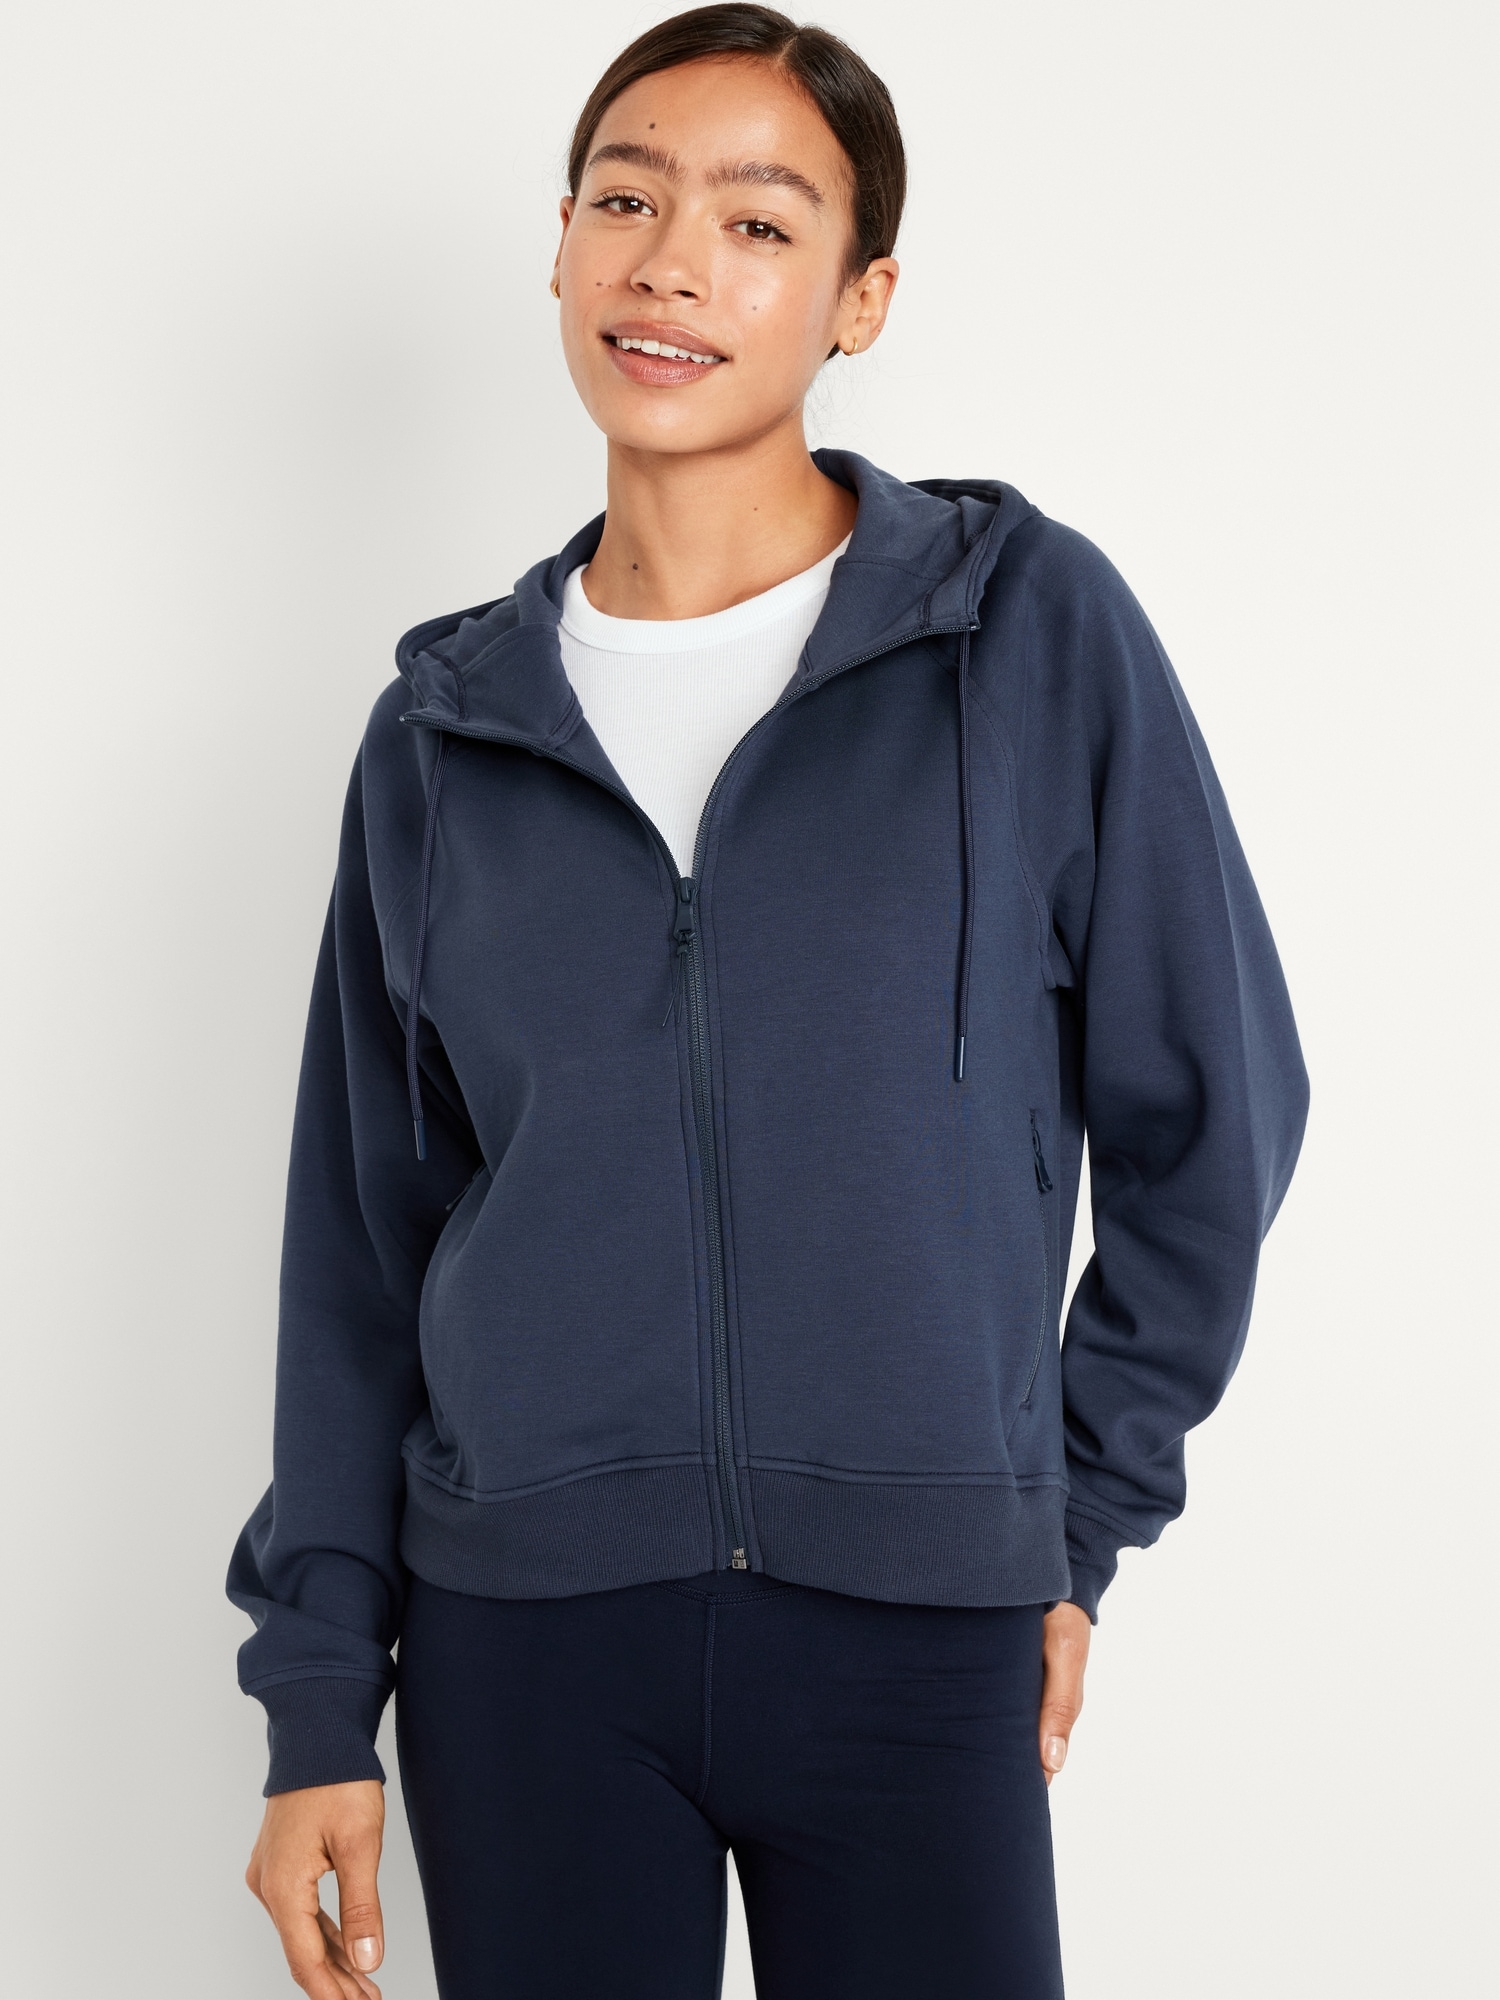 Lululemon Hoodie Navy Blue Women's Size 6 Zip Up Sweater Jacket Cotton  Fleece